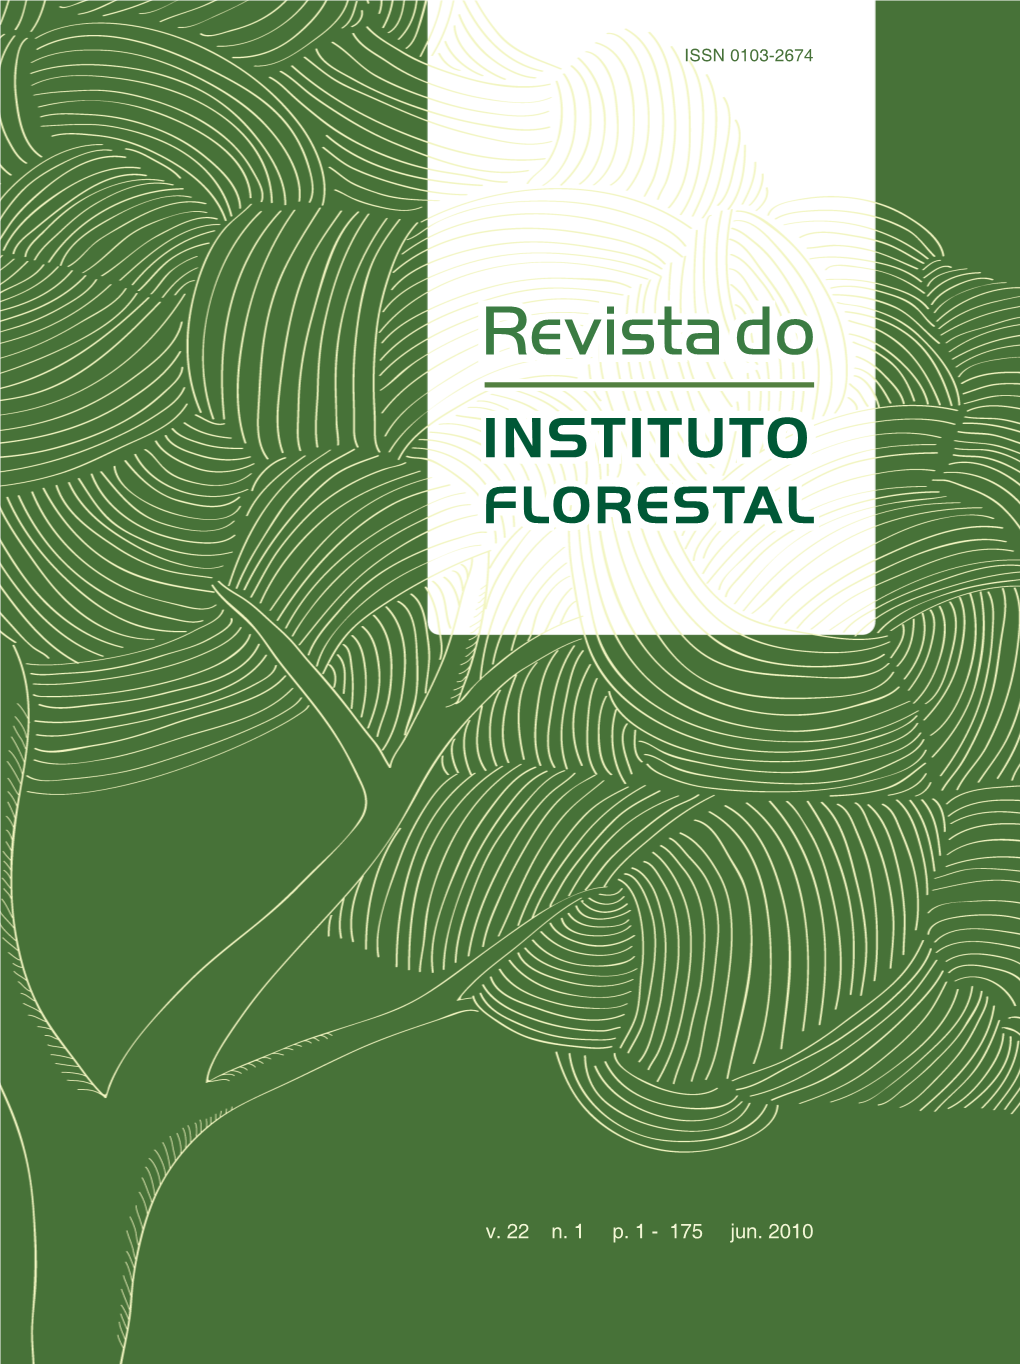 R Evista Do Instituto Florestal V. 22 N. 1 Jun. 20 10